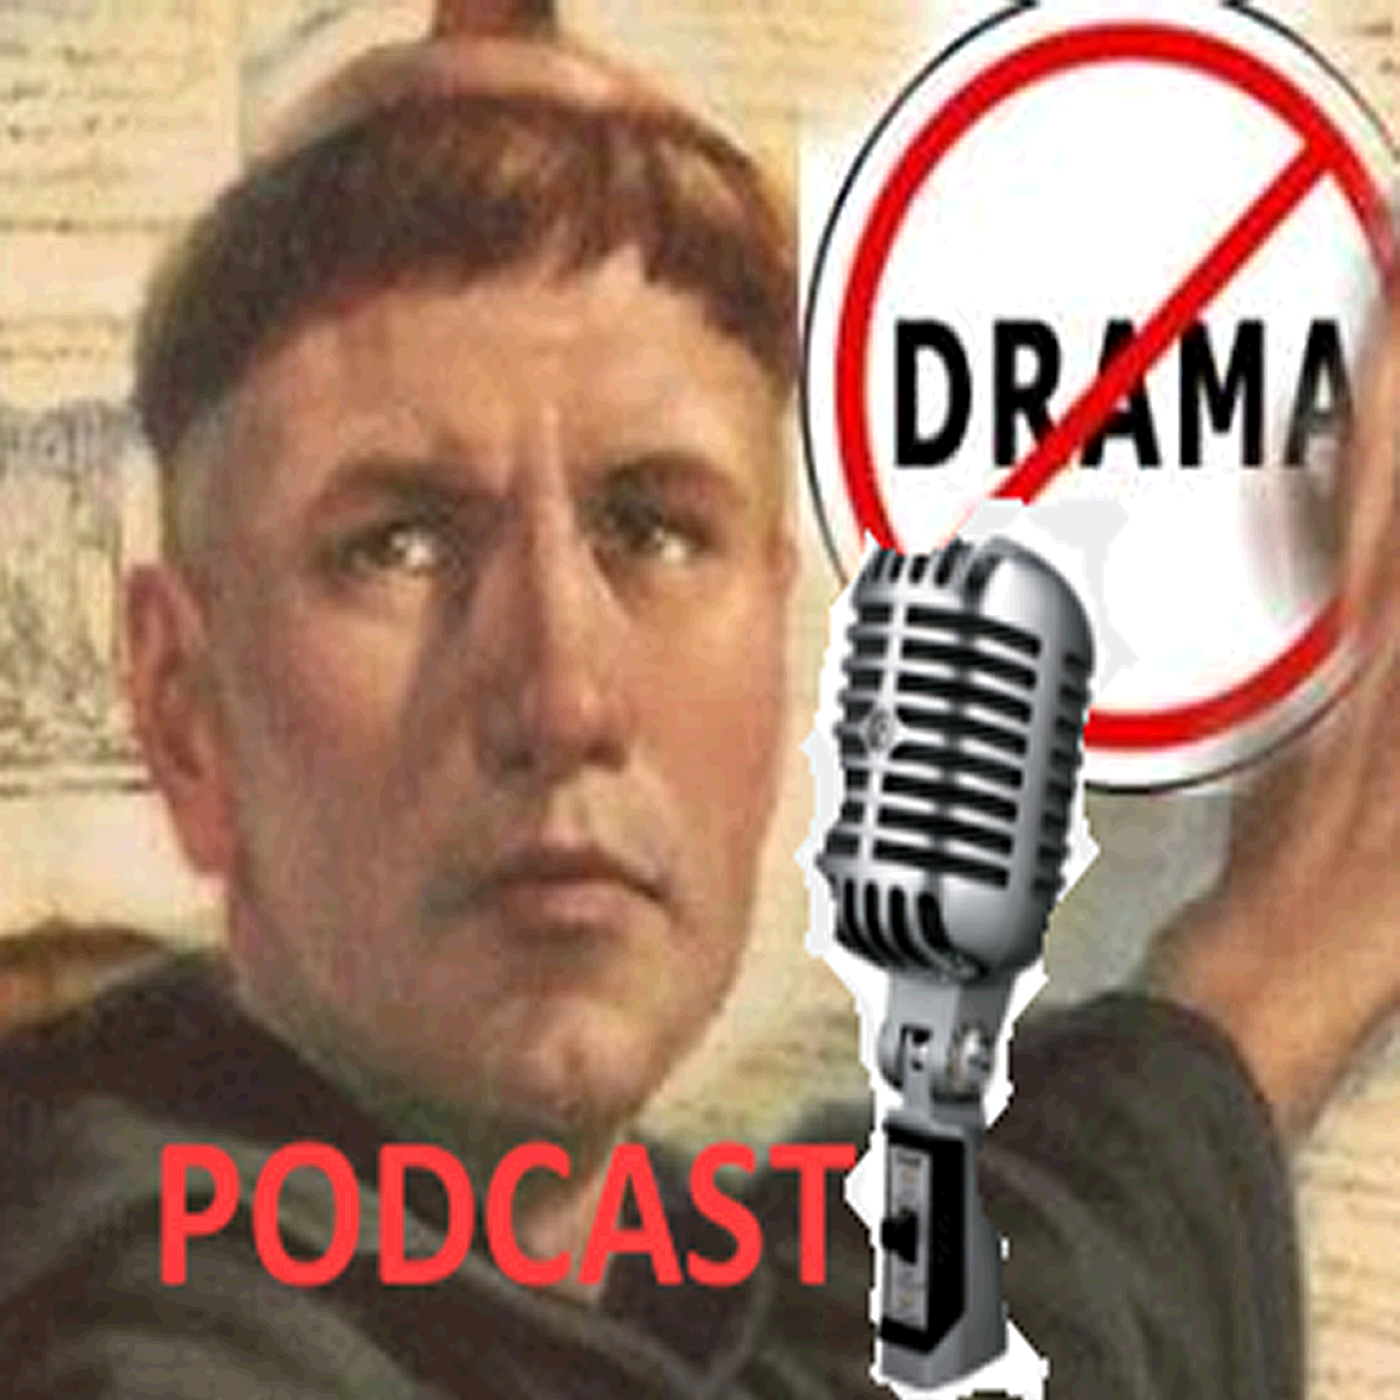 NO DRAMA Podcast - Episode 18: Romans 13